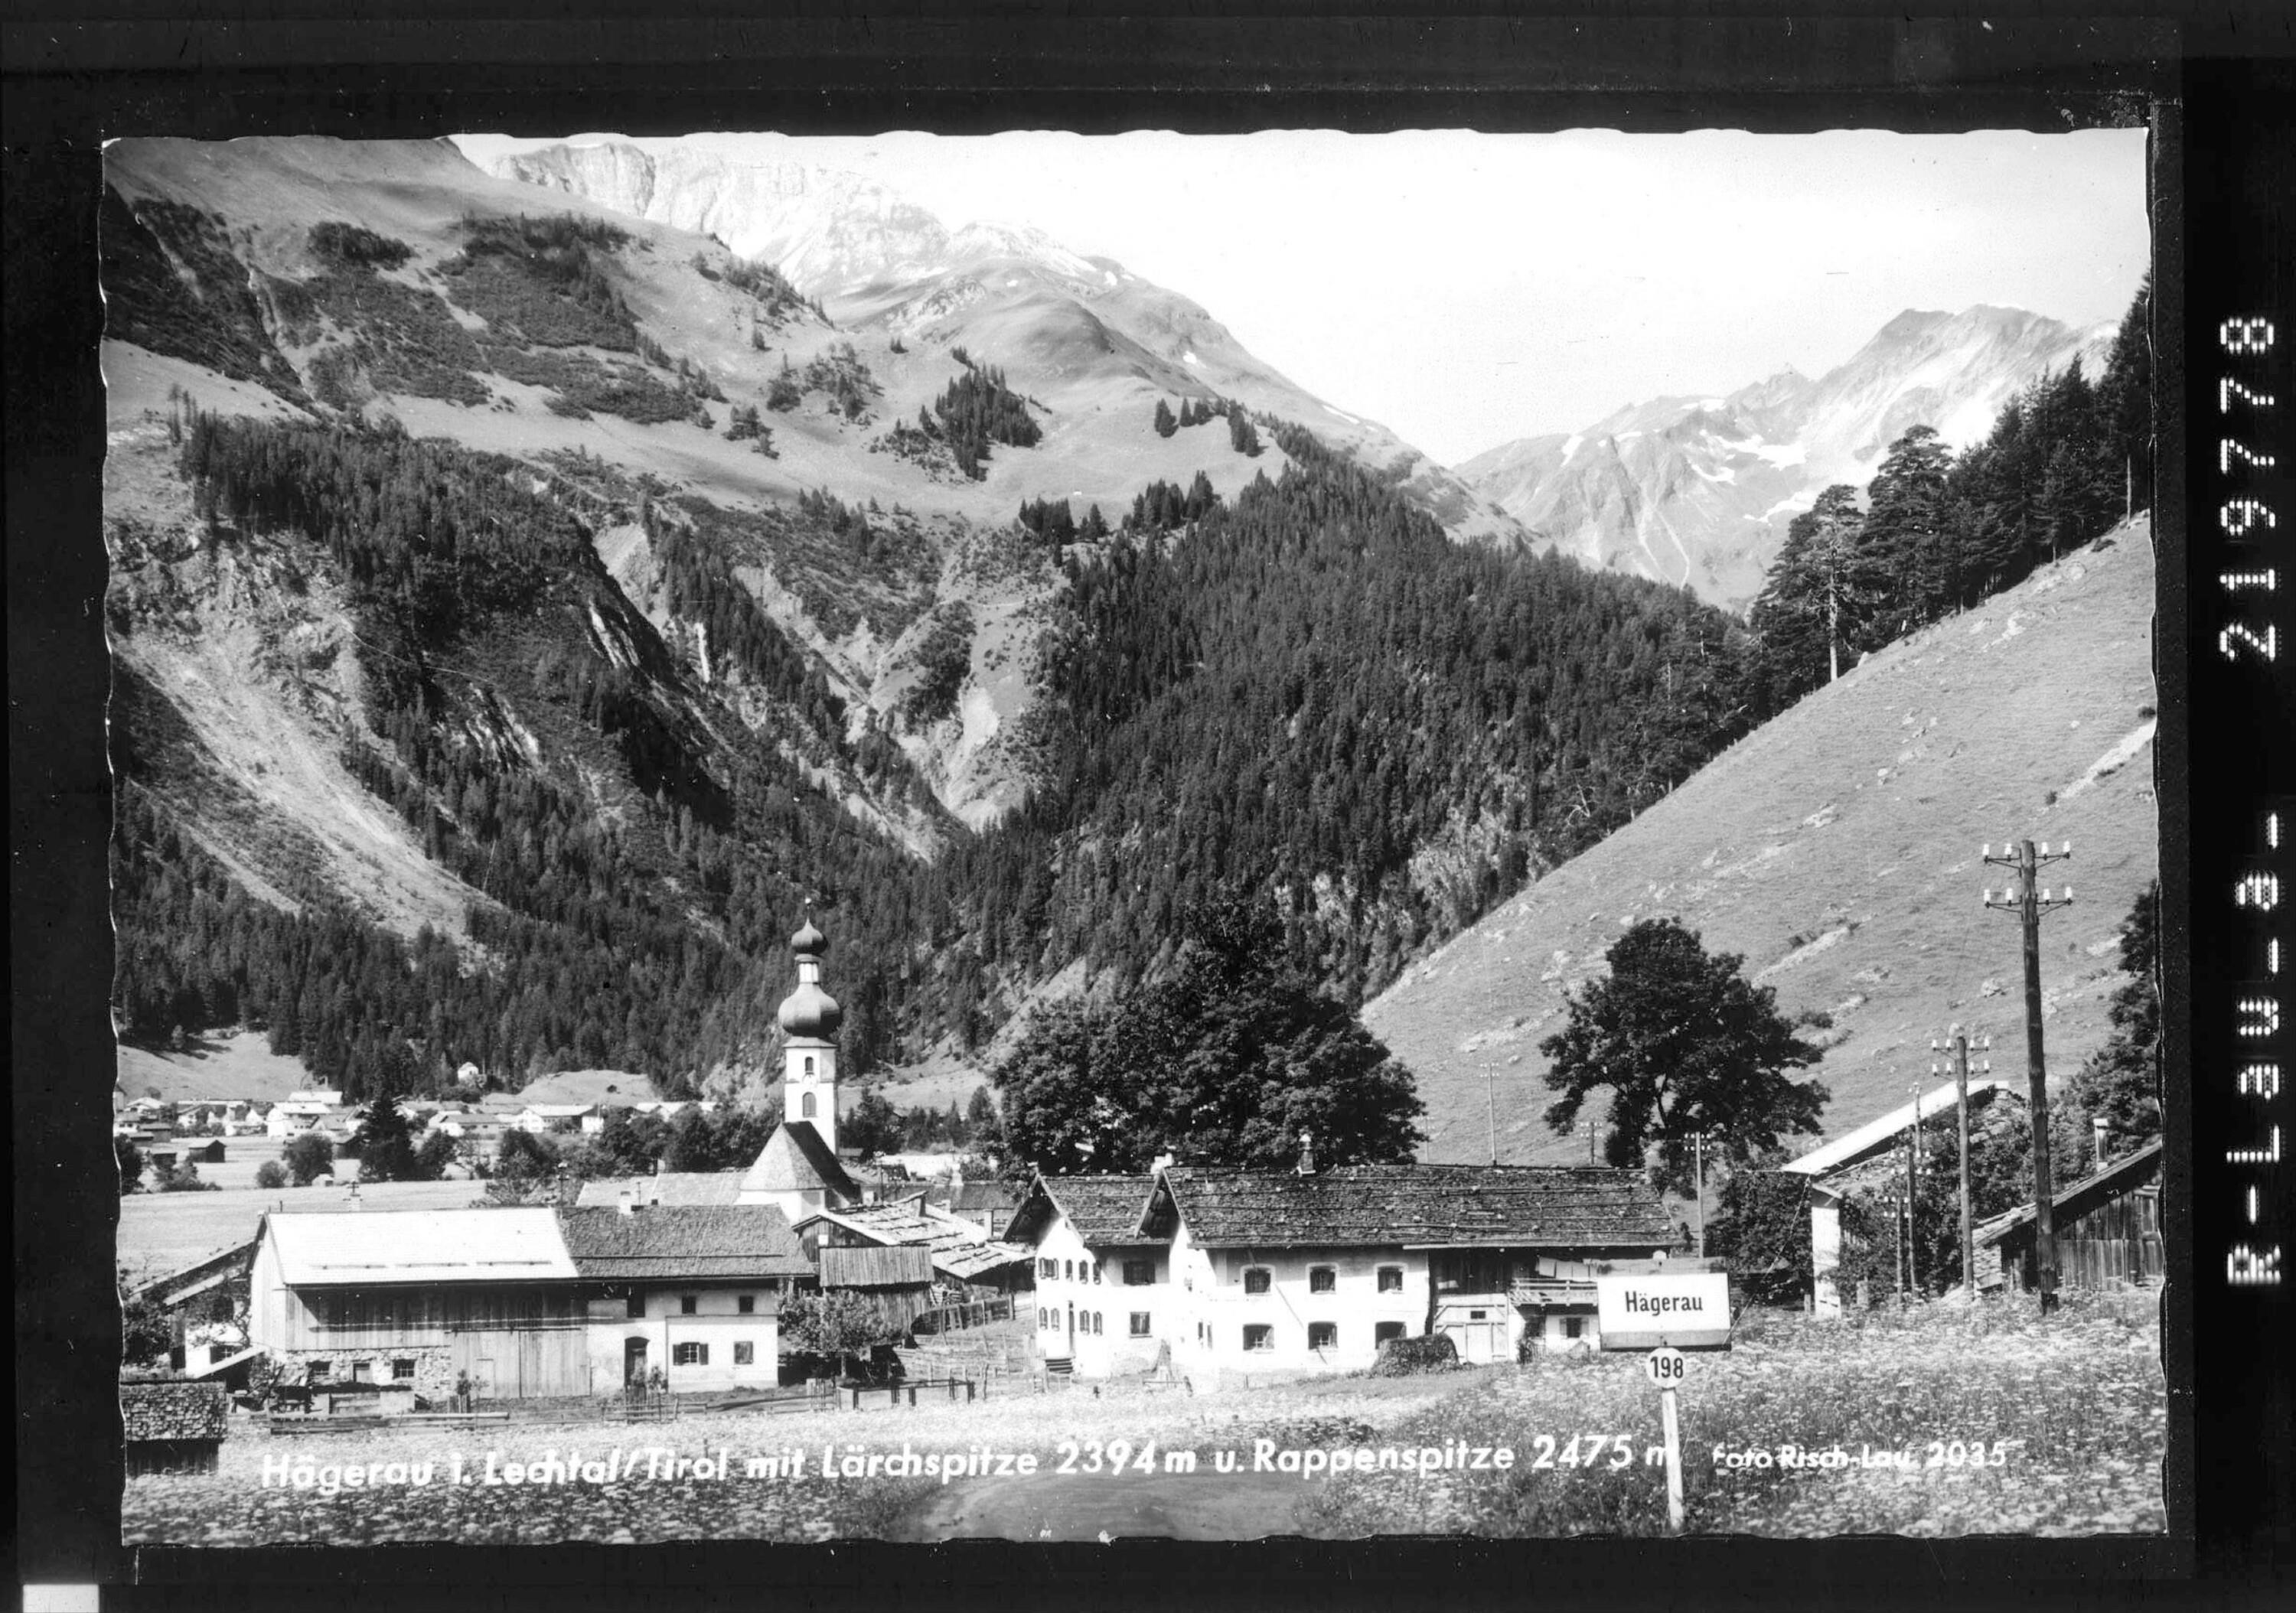 Hägerau im Lechtal / Tirol mit Lärchspitze 2394 m und Rappenspitze 2475 m></div>


    <hr>
    <div class=